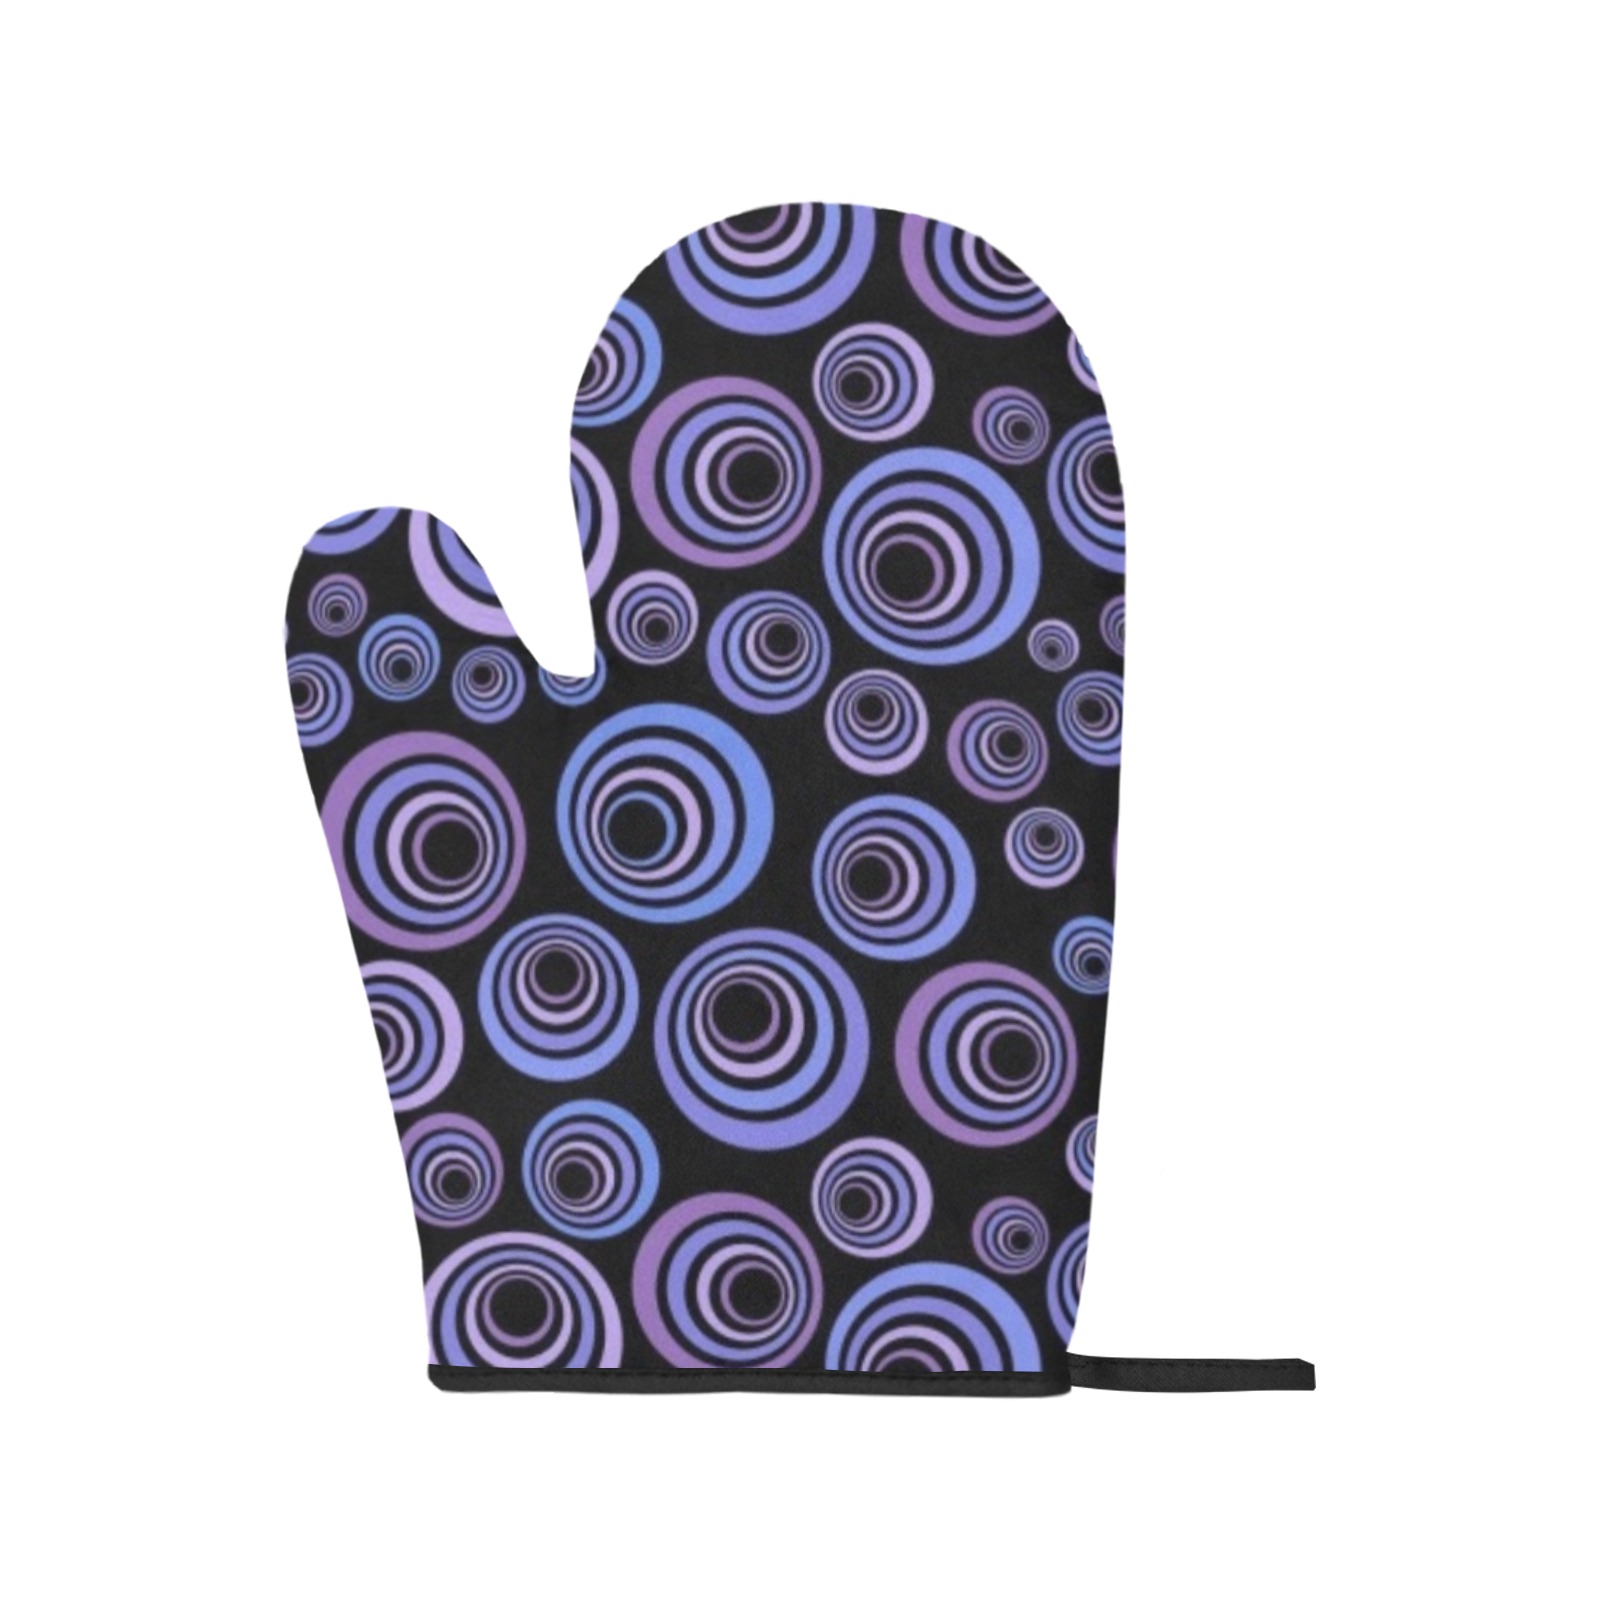 Retro Psychedelic Pretty Purple Pattern Oven Mitt & Pot Holder